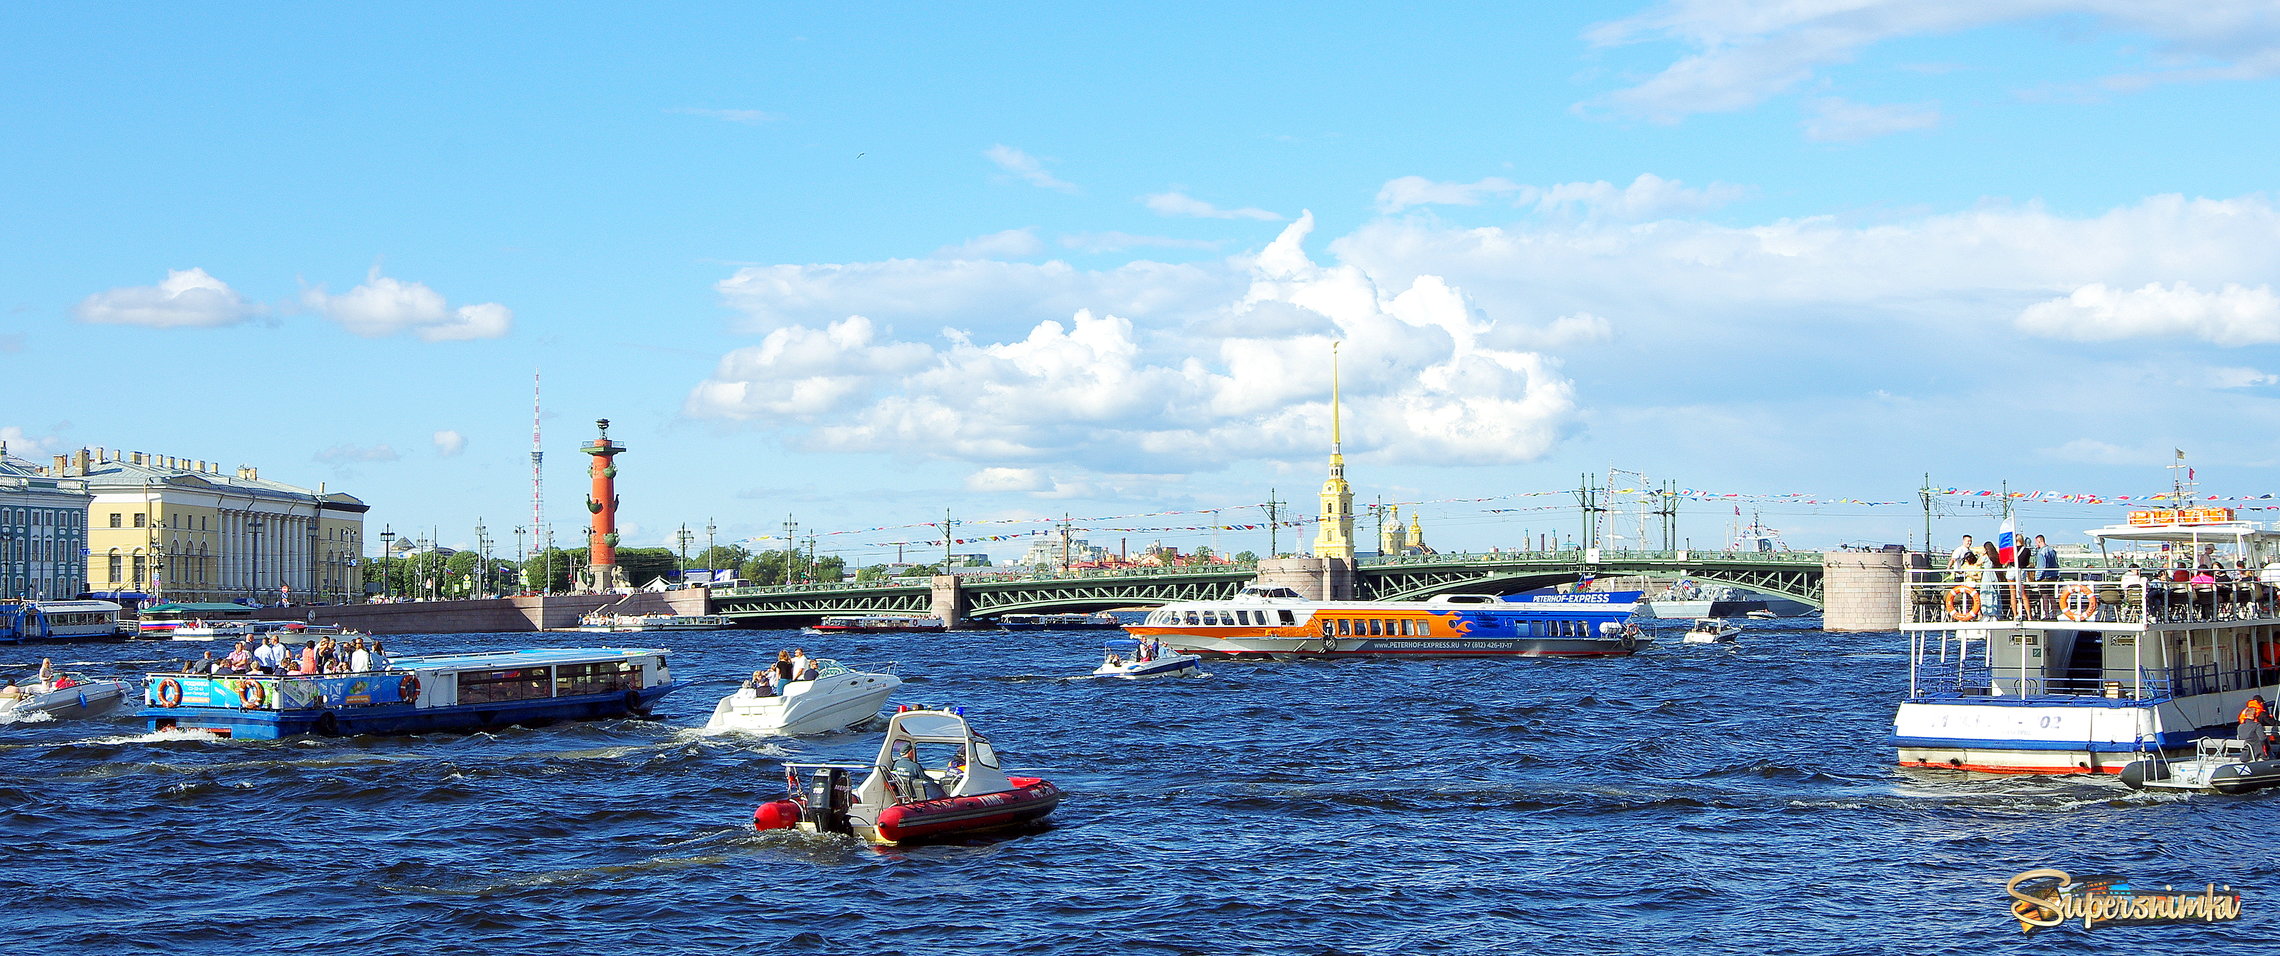 Нева накануне дня ВМФ в Санкт-Петербурге